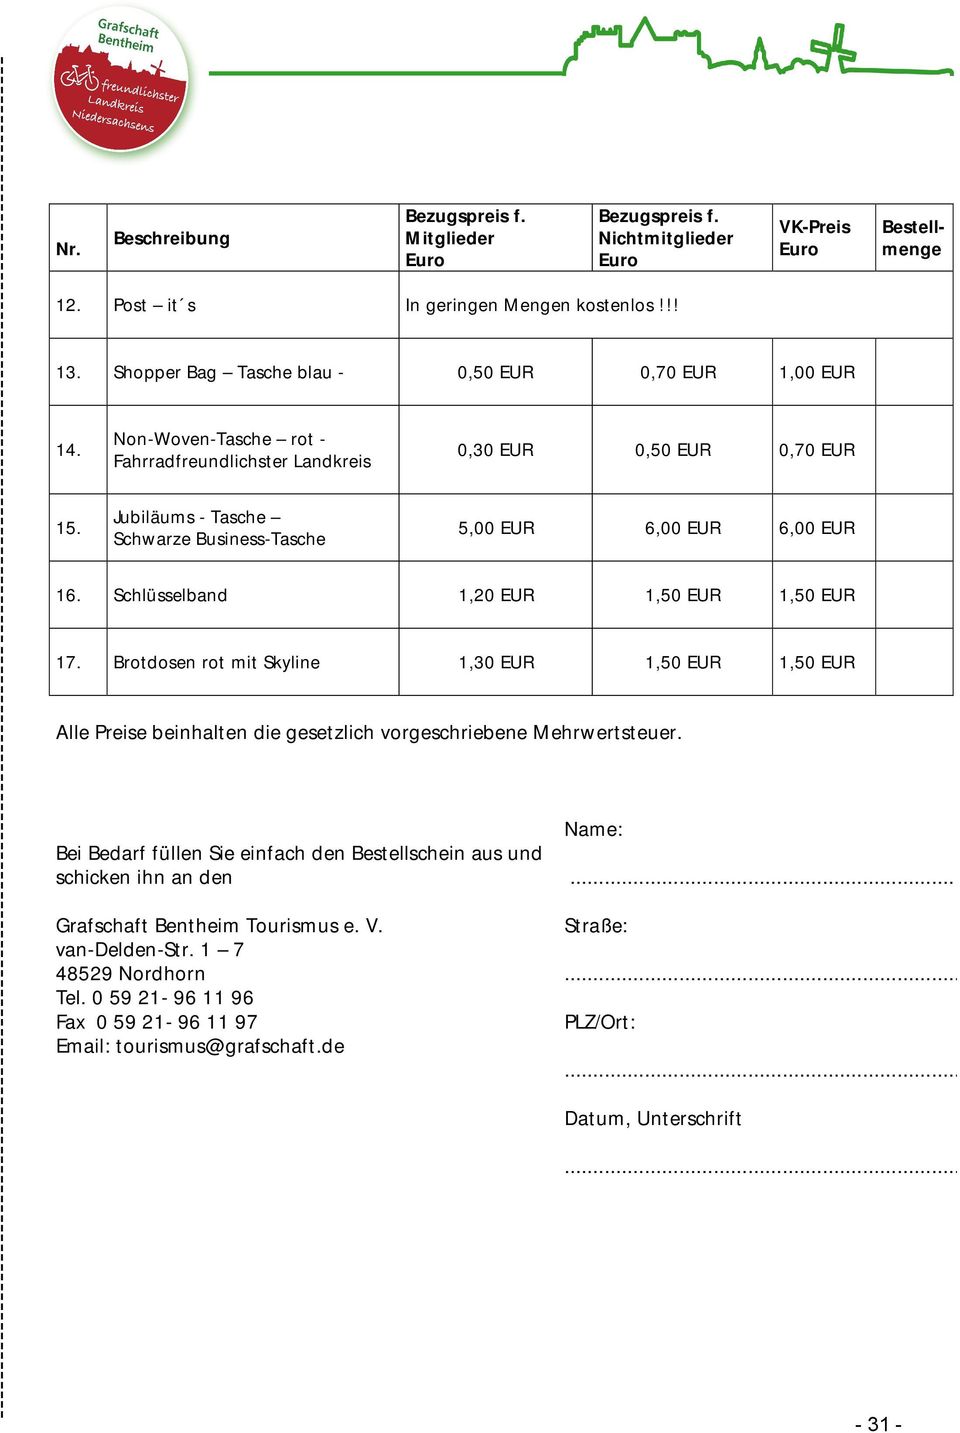 Non-Woven-Tasche rot - Fahrradfreundlichster Landkreis Jubiläums - Tasche Schwarze Business-Tasche 0,30 EUR 0,50 EUR 0,70 EUR 5,00 EUR 6,00 EUR 6,00 EUR 16.